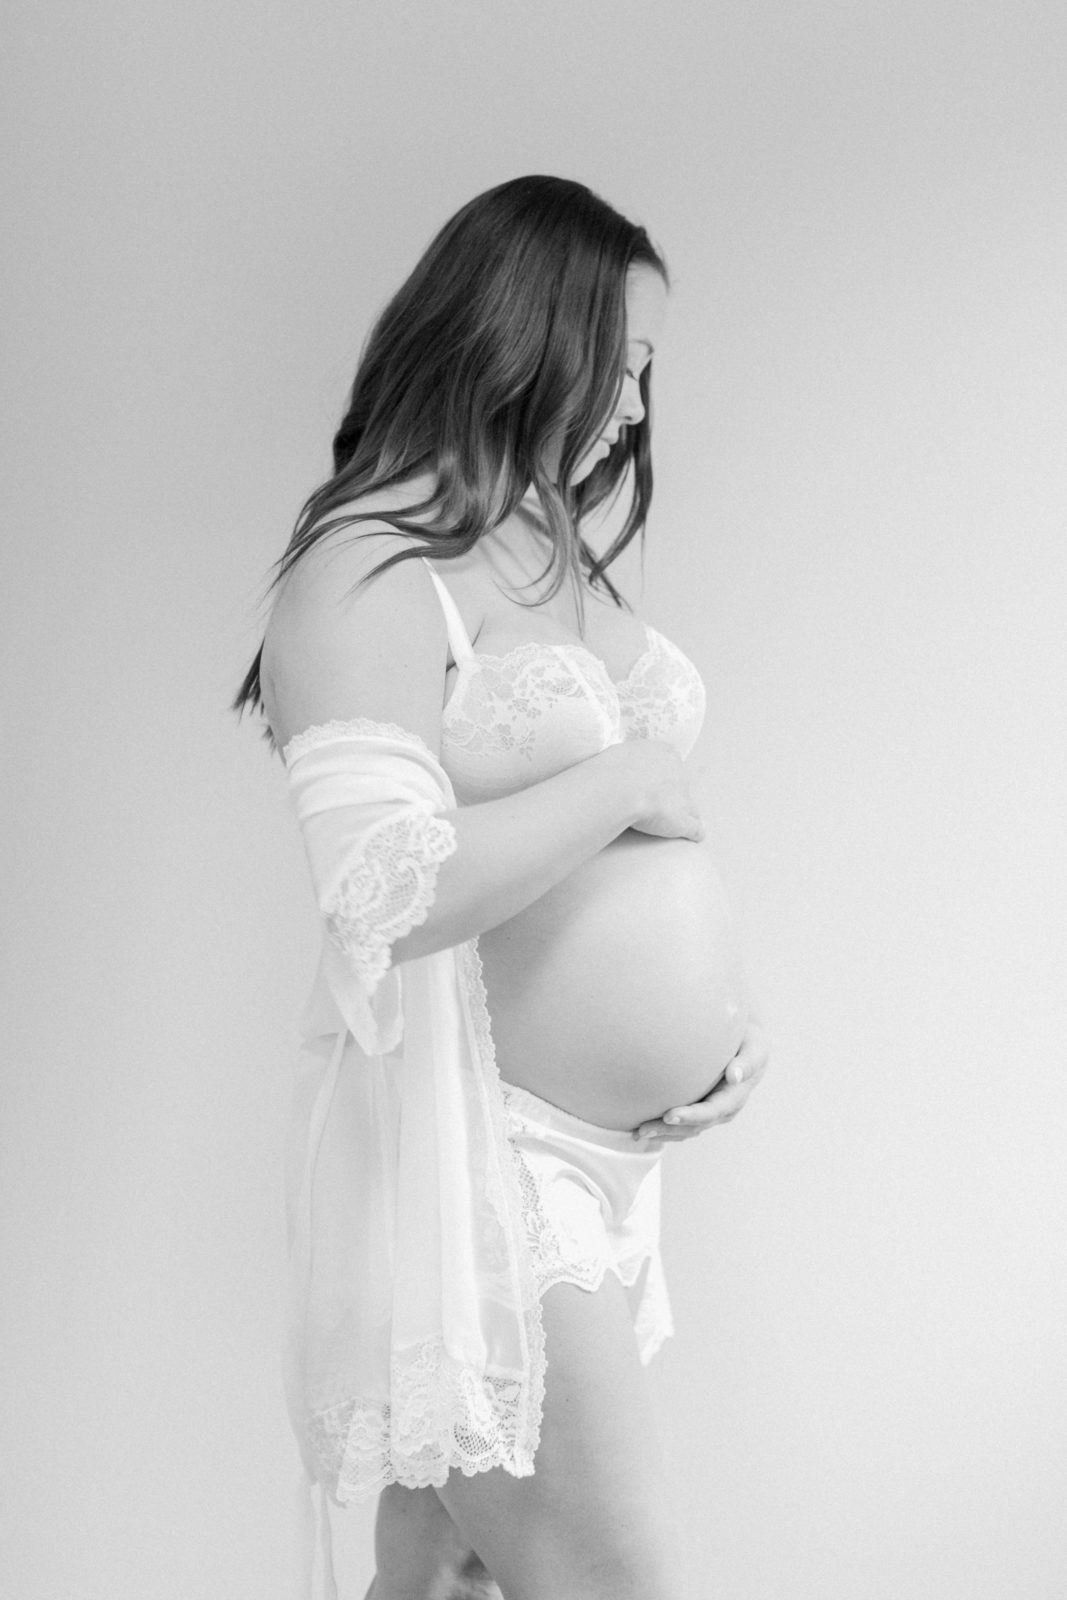 Fine art maternity photographer | Paris maternity photograph | Film photographer